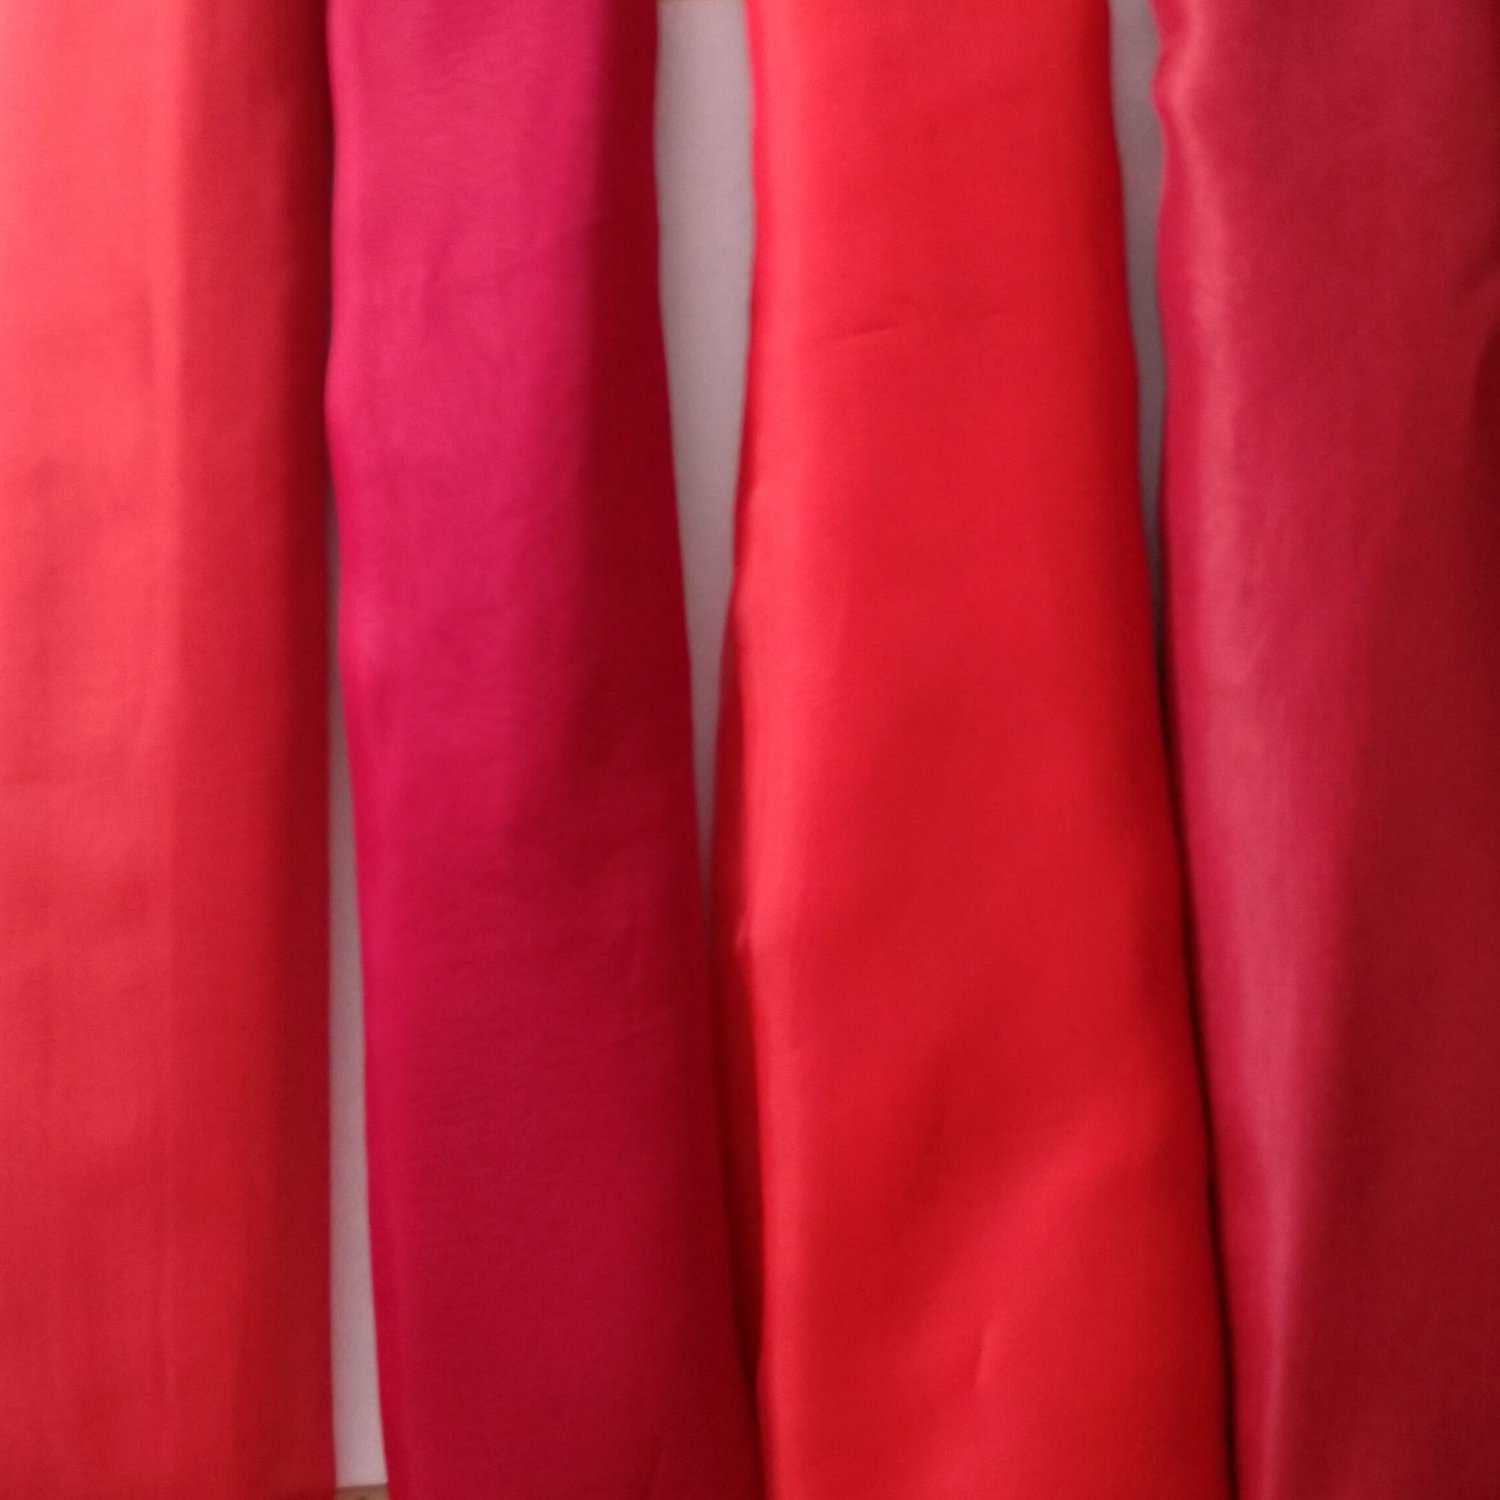 100 silk organza fabric shades of orange by the yard free shipping —